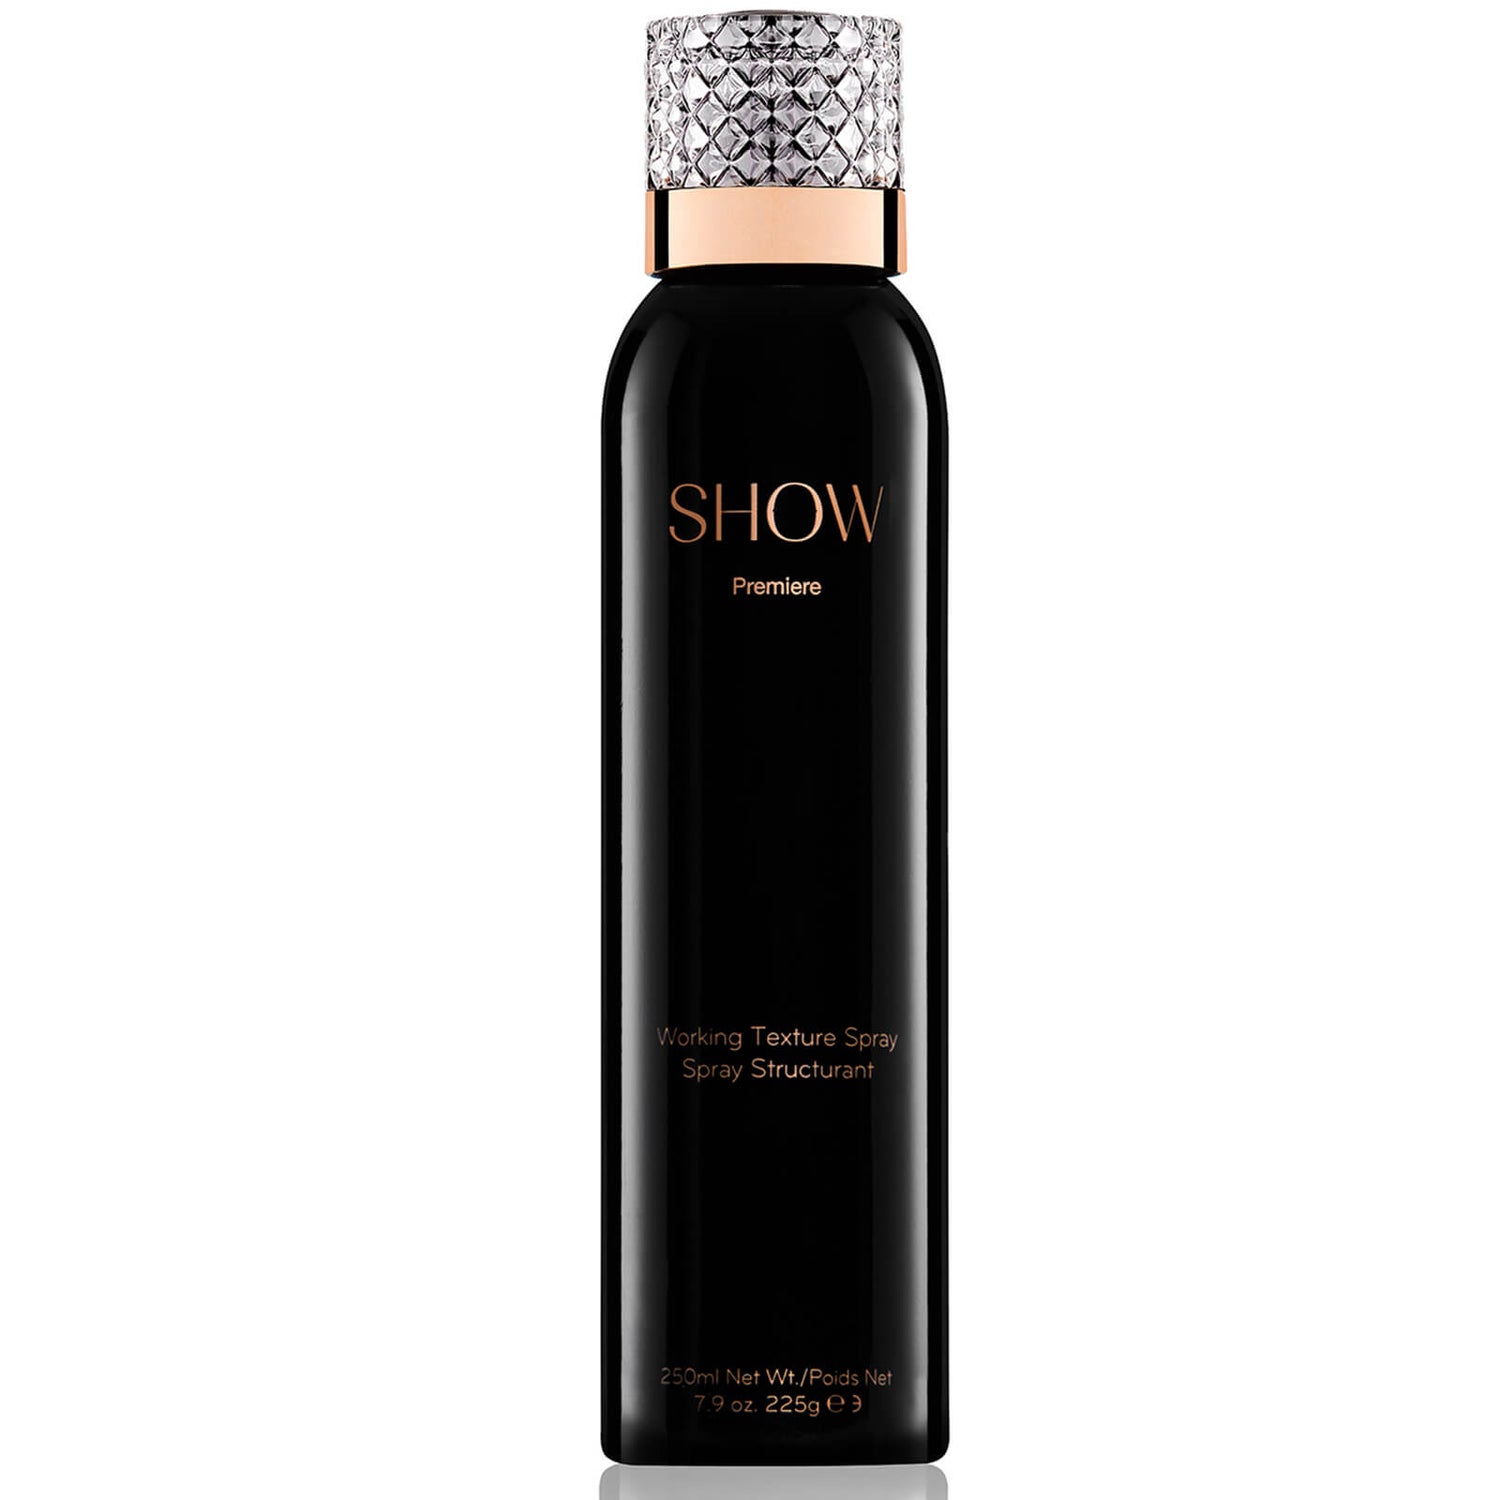 SHOW Beauty Premiere Working Texture Spray 250ml